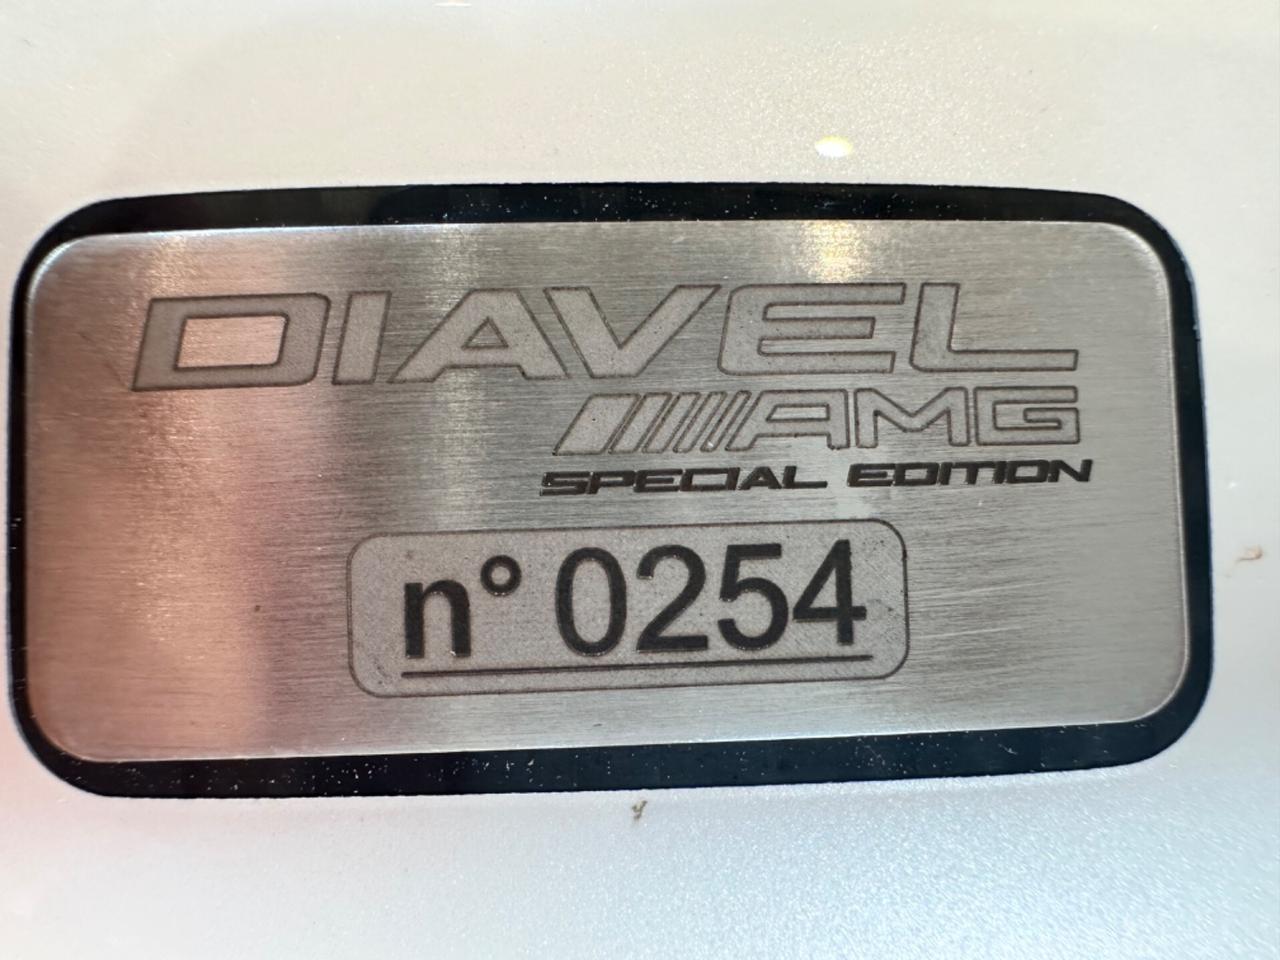 Ducati Diavel Amg edition 0/254